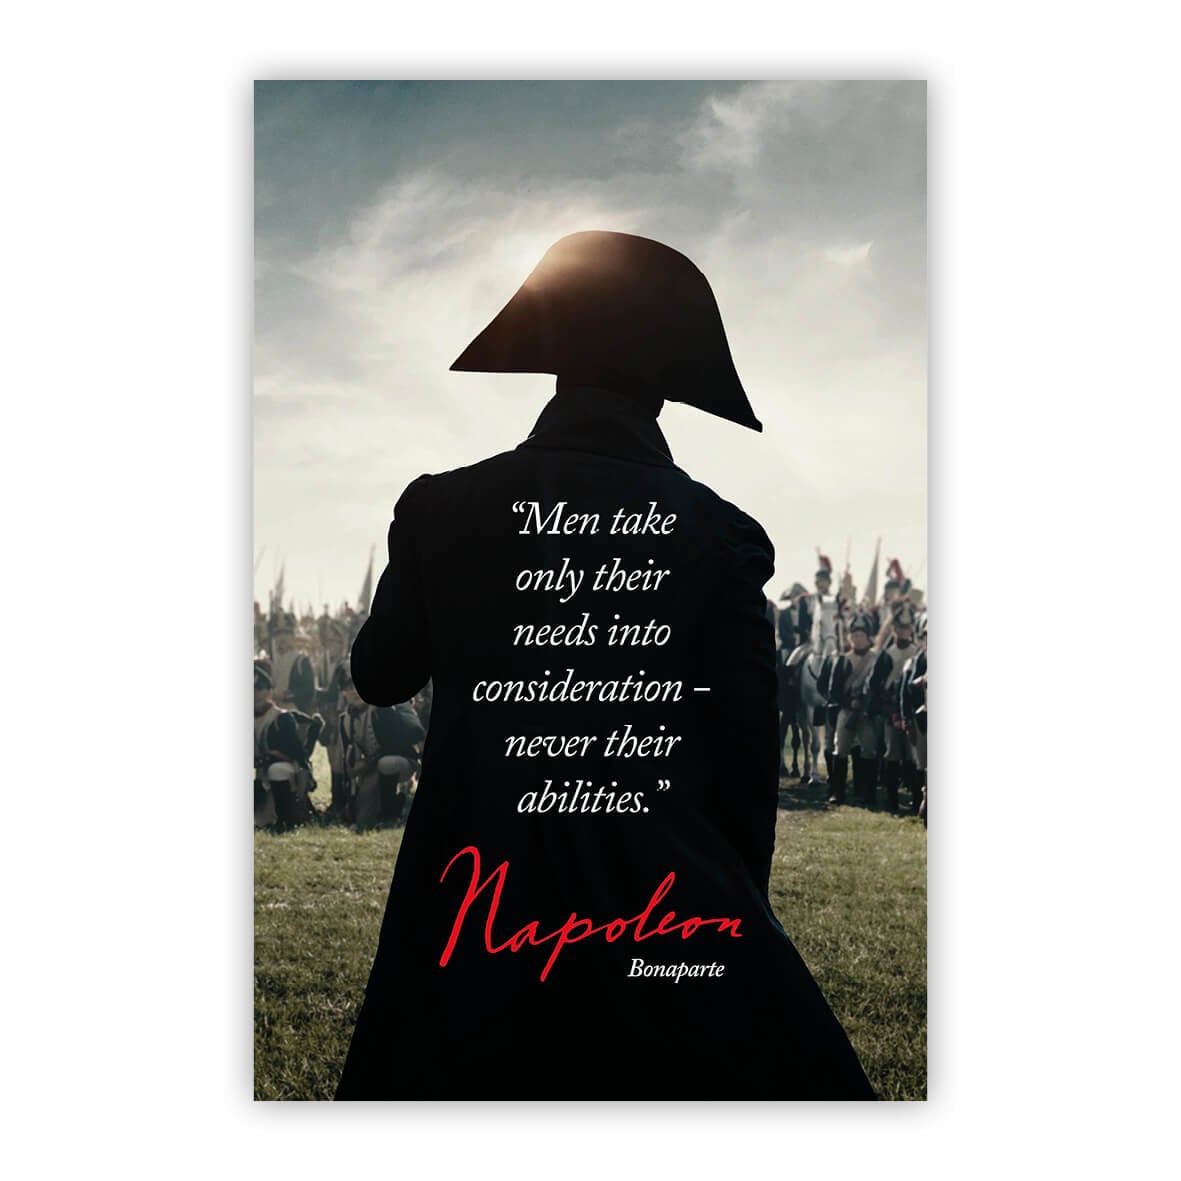 Men take only their needs into consideration - never their abilities. - Napoleon Bonaparte